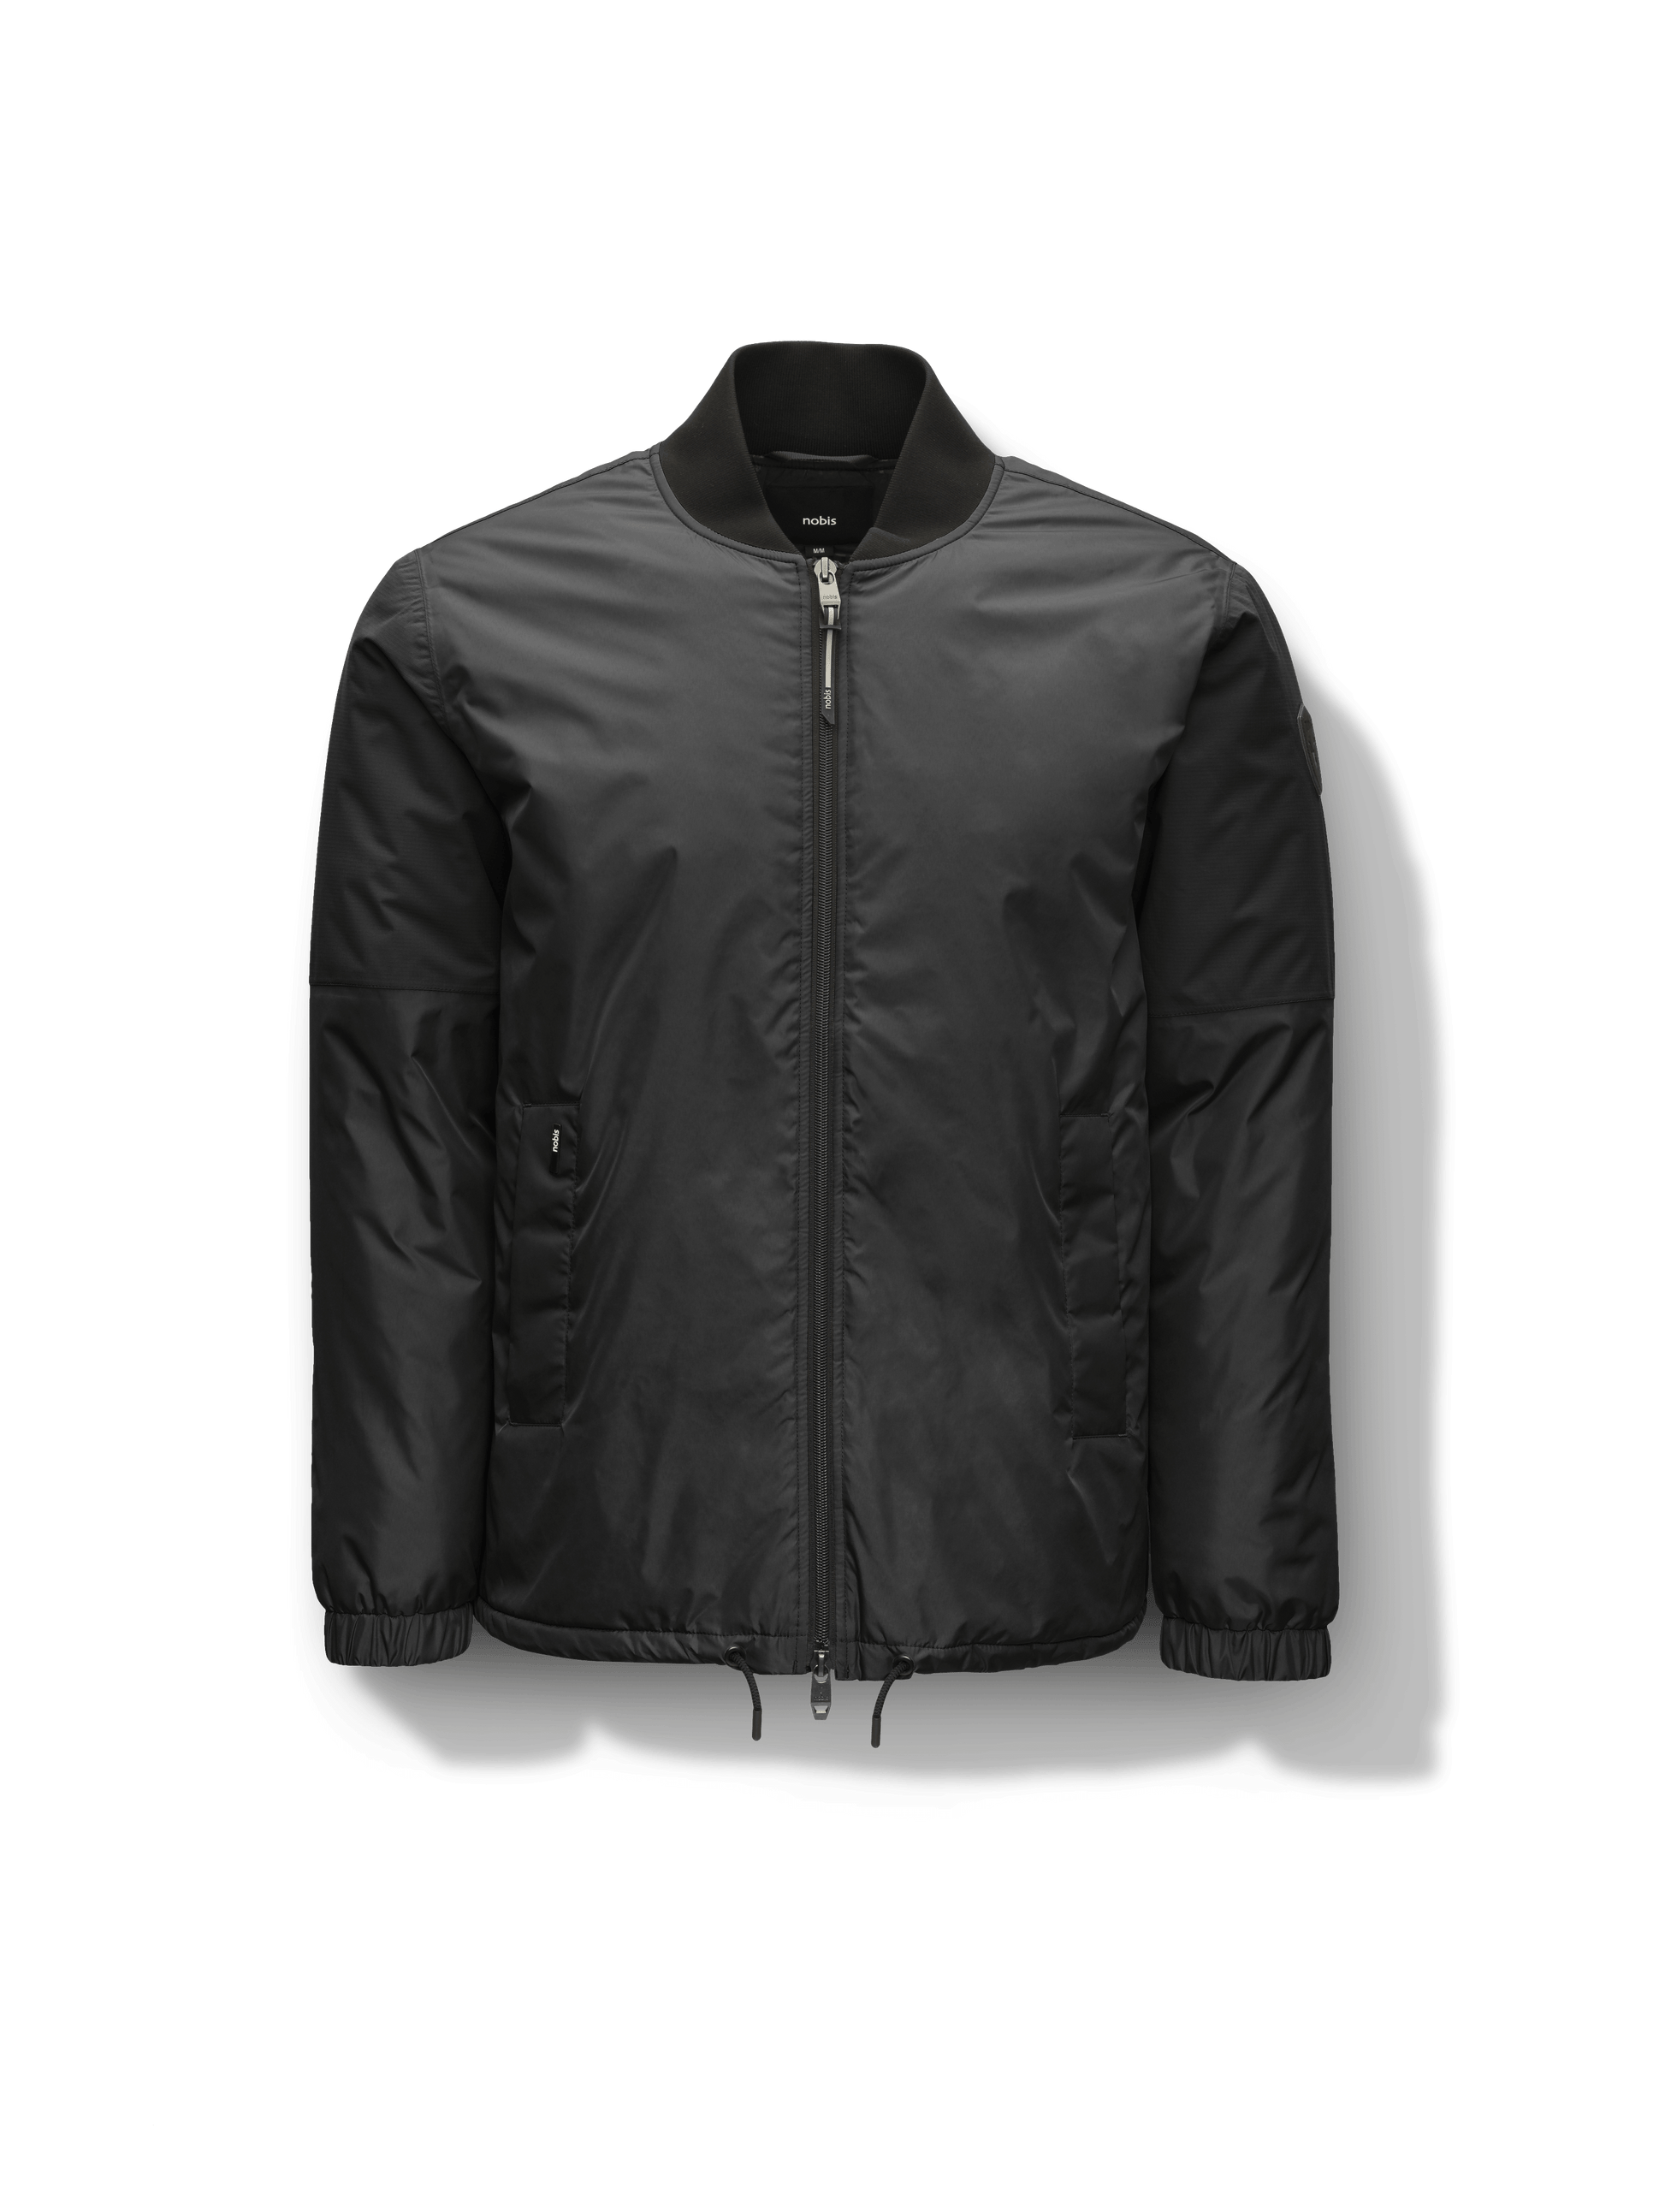 Edgemont Men's Tailored Coach Jacket in hip length, rib knit collar, elastic cuffs, centre front two-wau zipper, single welt waist pockets, adjustable waist drawstring, in Black